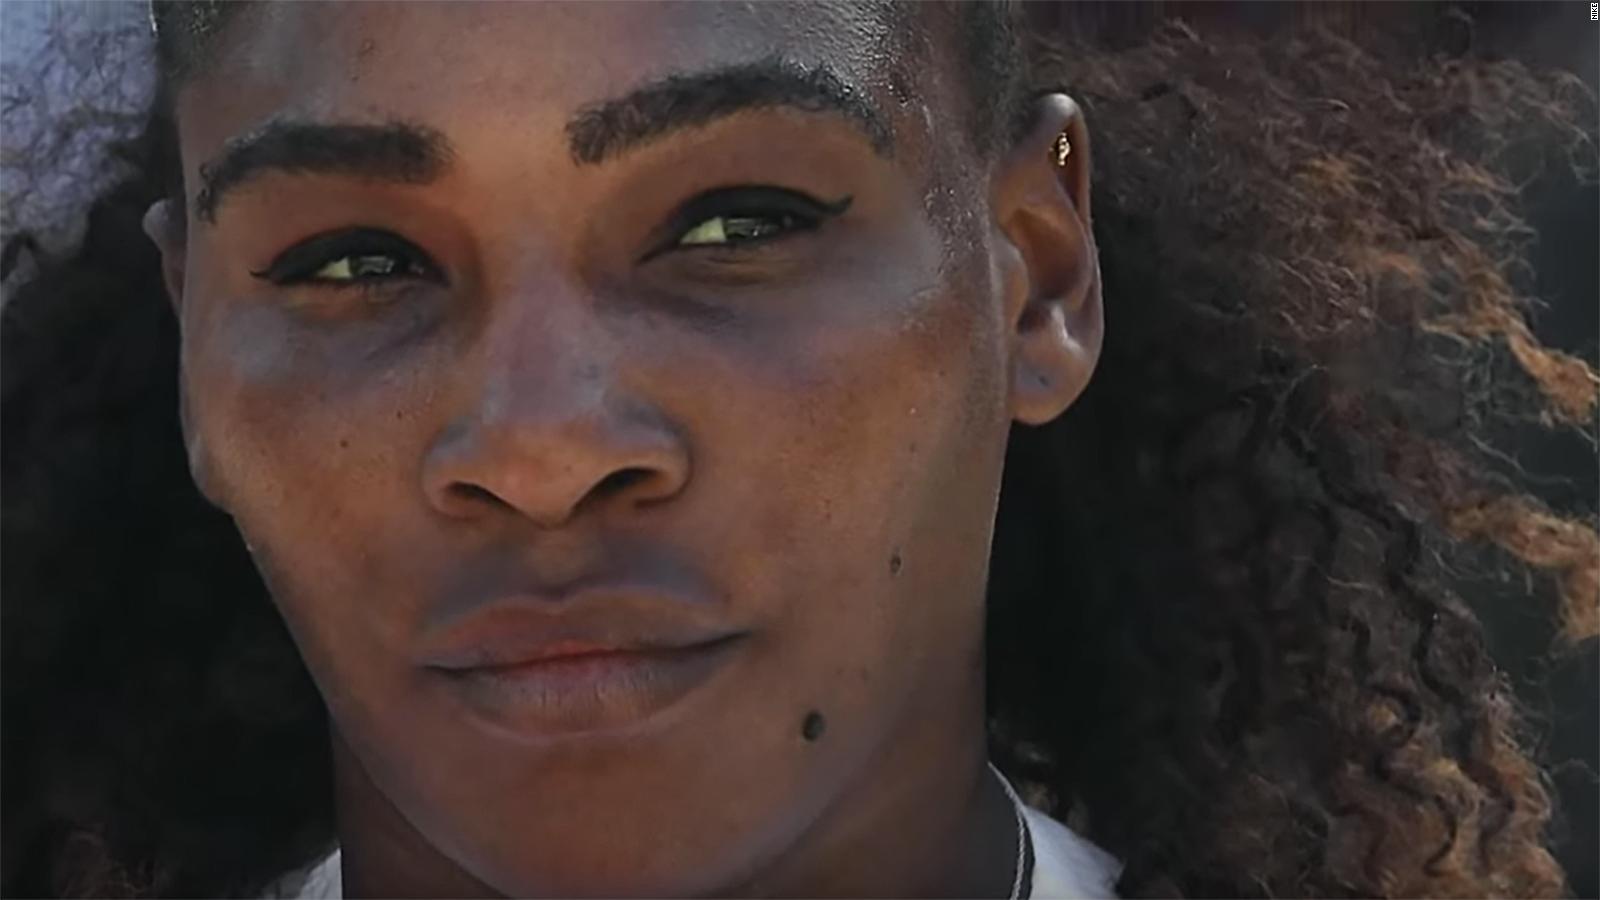 ampliar extraer infancia El poderoso comercial de Nike en voz de Serena Williams | Video | CNN